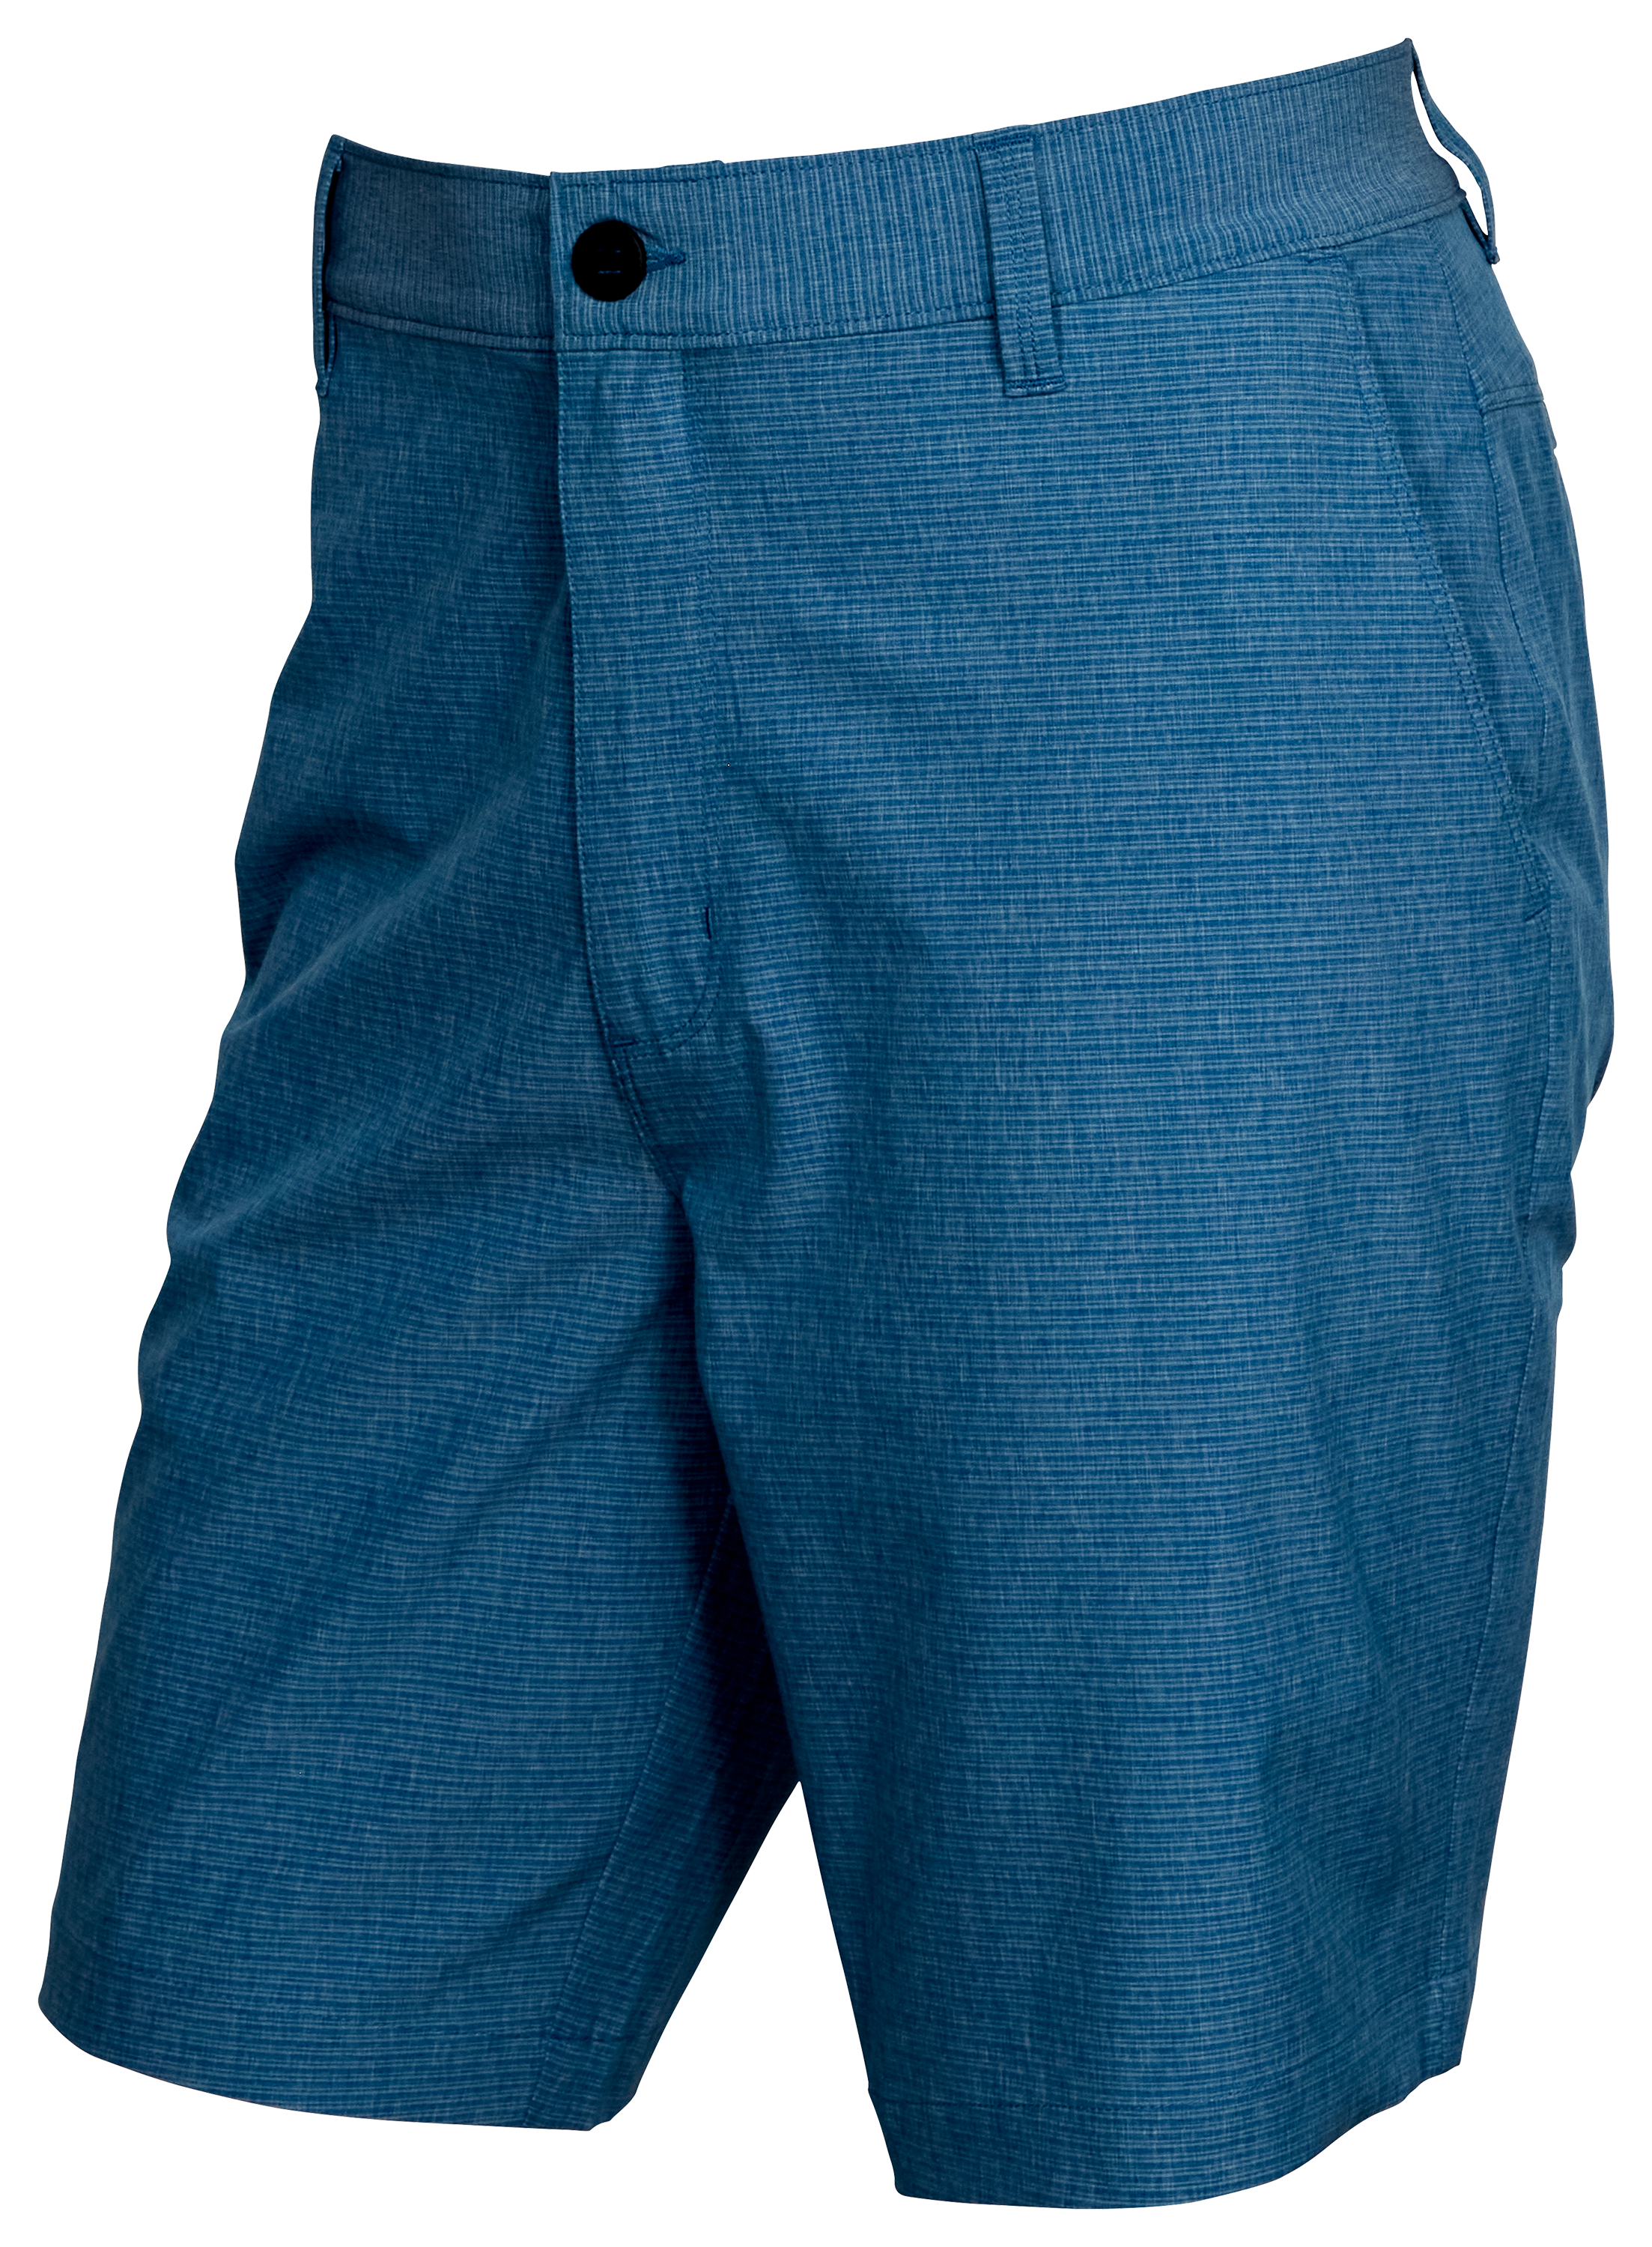 World Wide Sportsman Pescador Stretch Fishing Shorts for Men - Vallarta Blue Stripe - 42